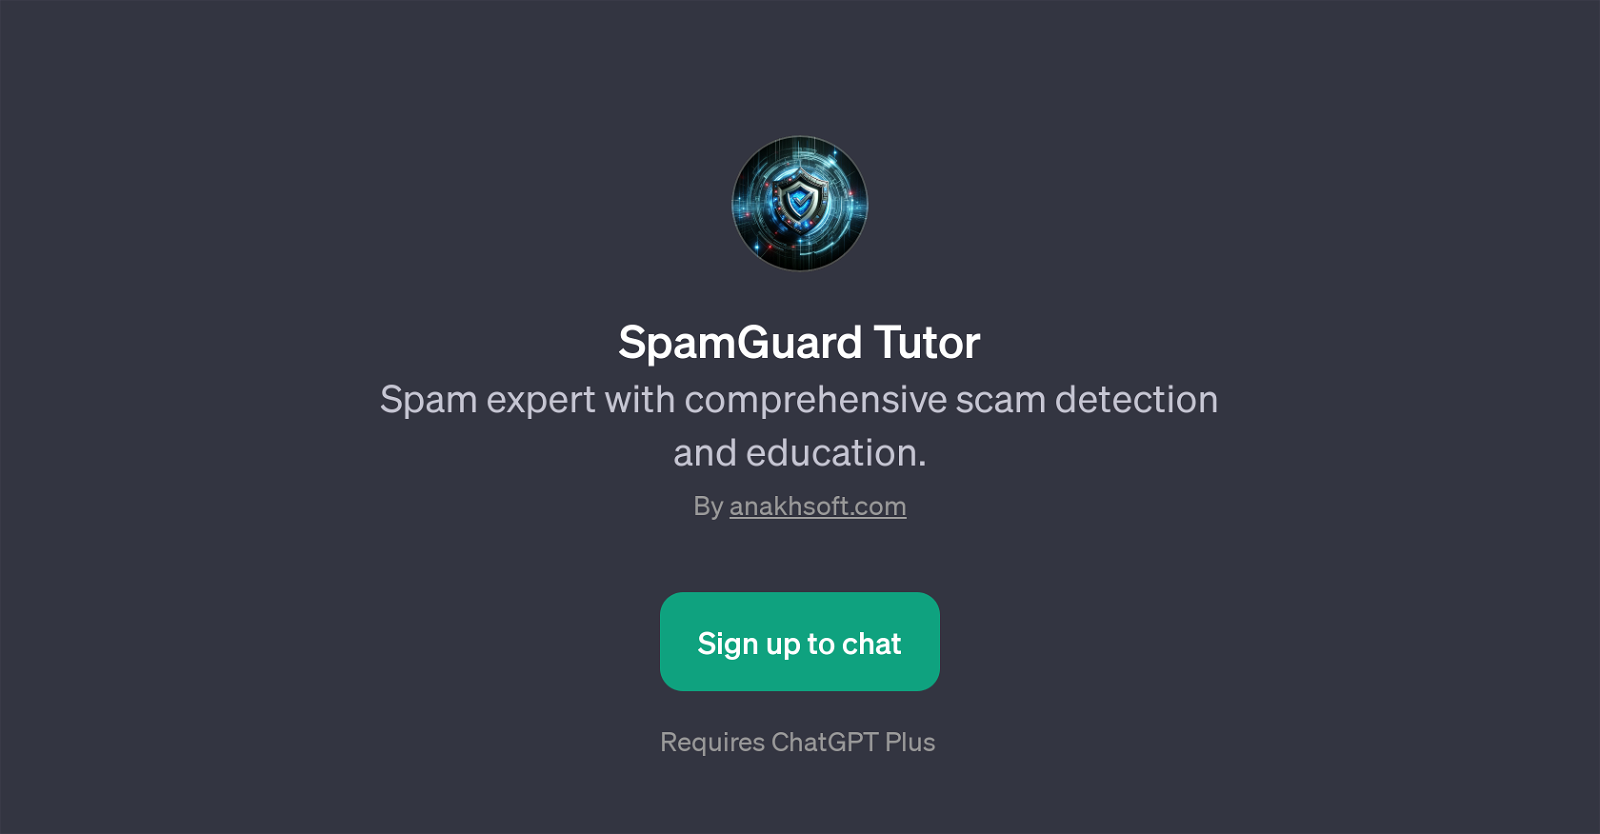 SpamGuard Tutor website